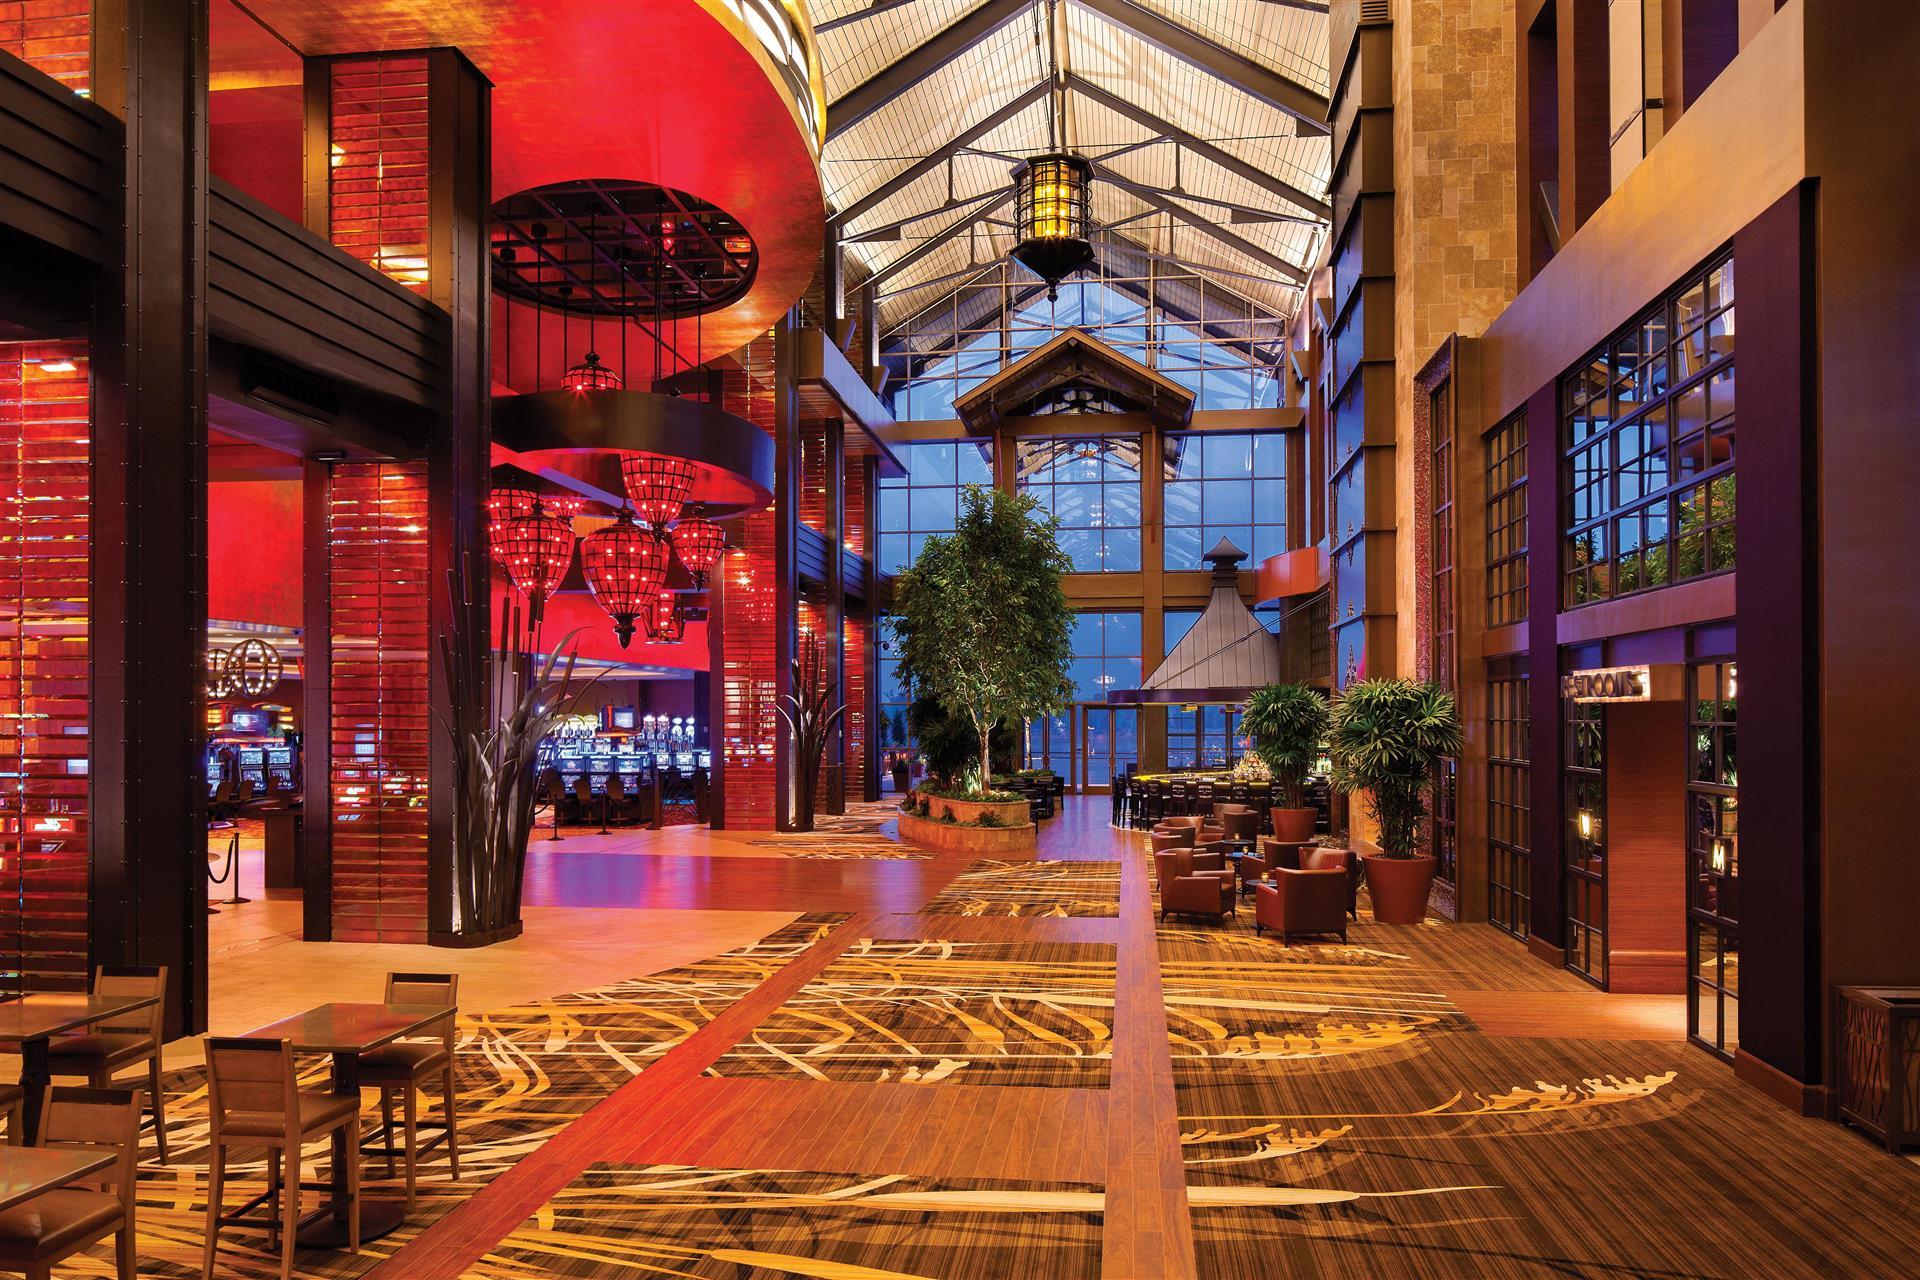 L'Auberge Casino & Hotel in Baton Rouge, LA